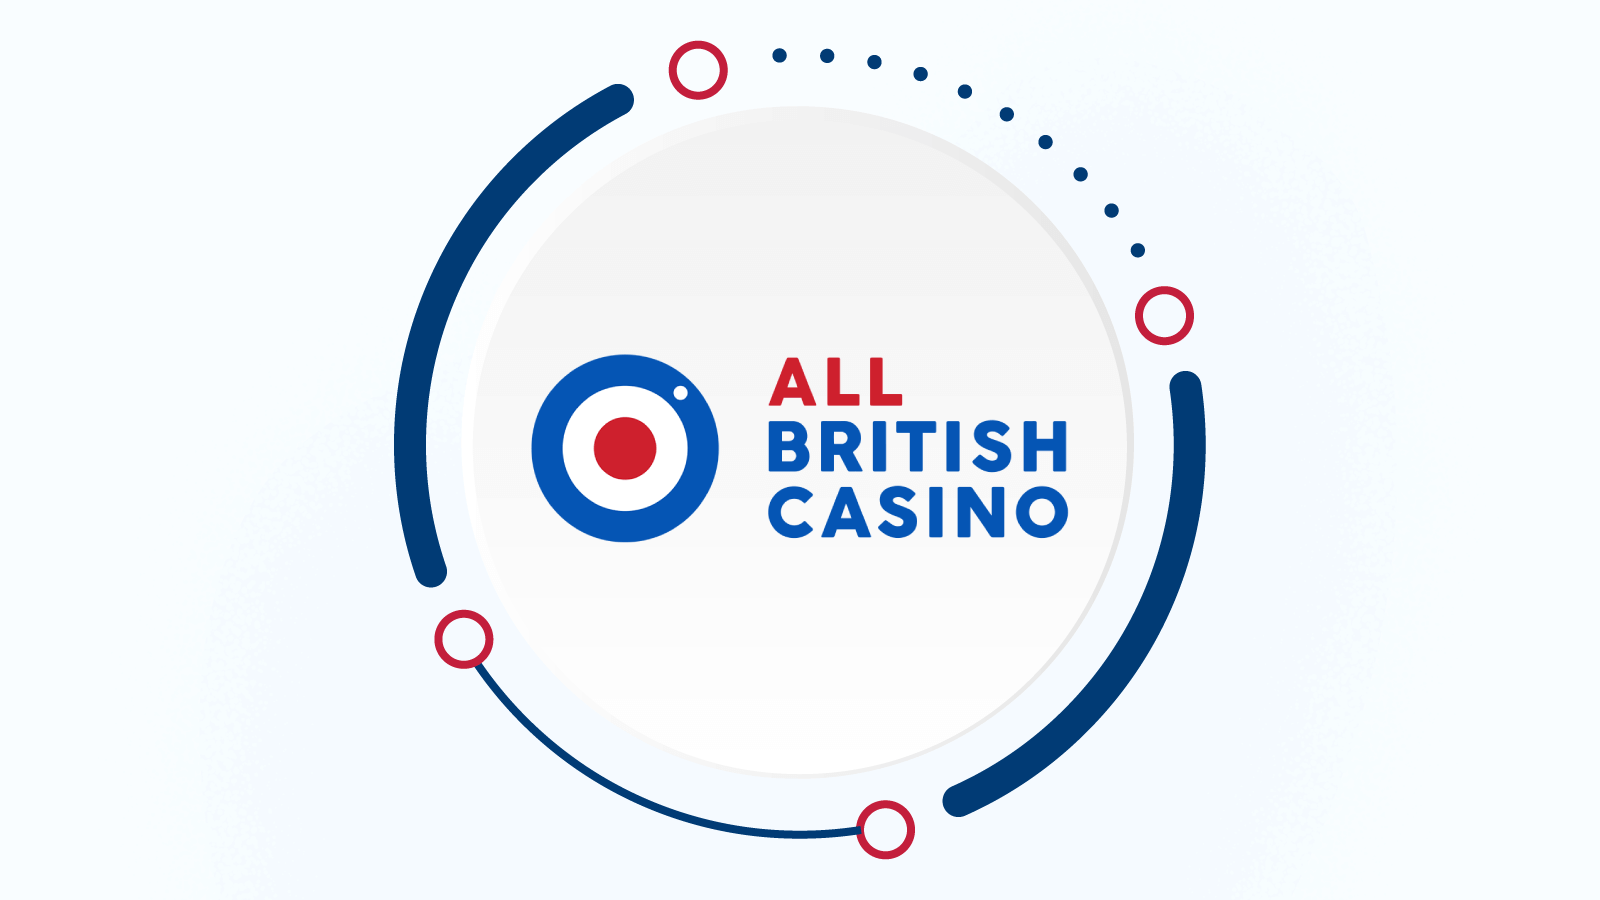 10% Cashback at All British Casino The best cashback bonus in the UK